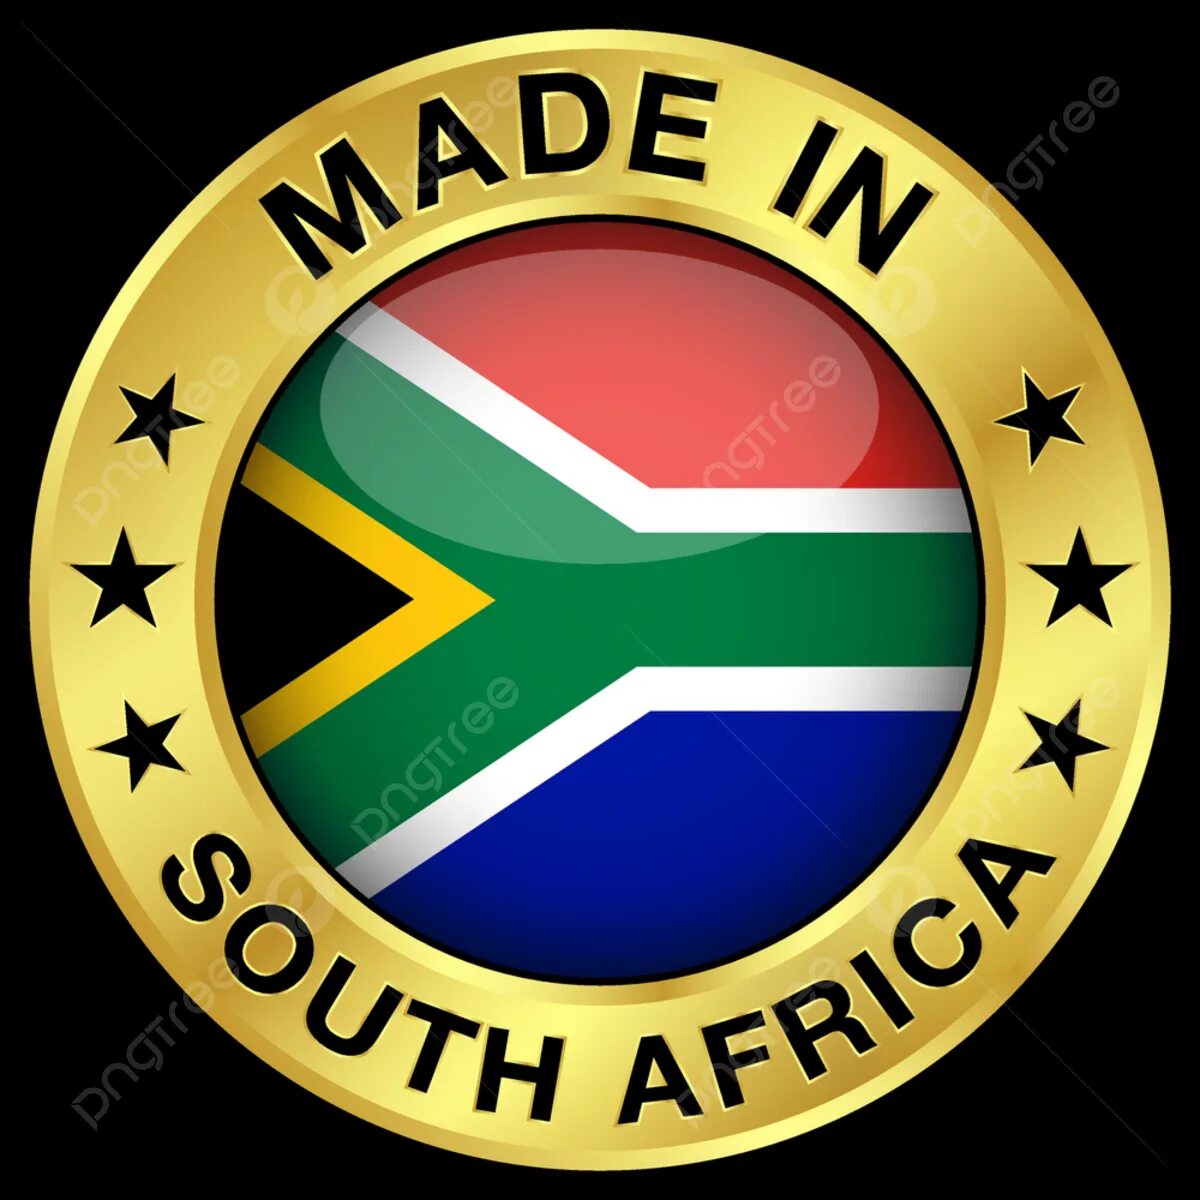 Nedbank в ЮАР лого. Made in africa